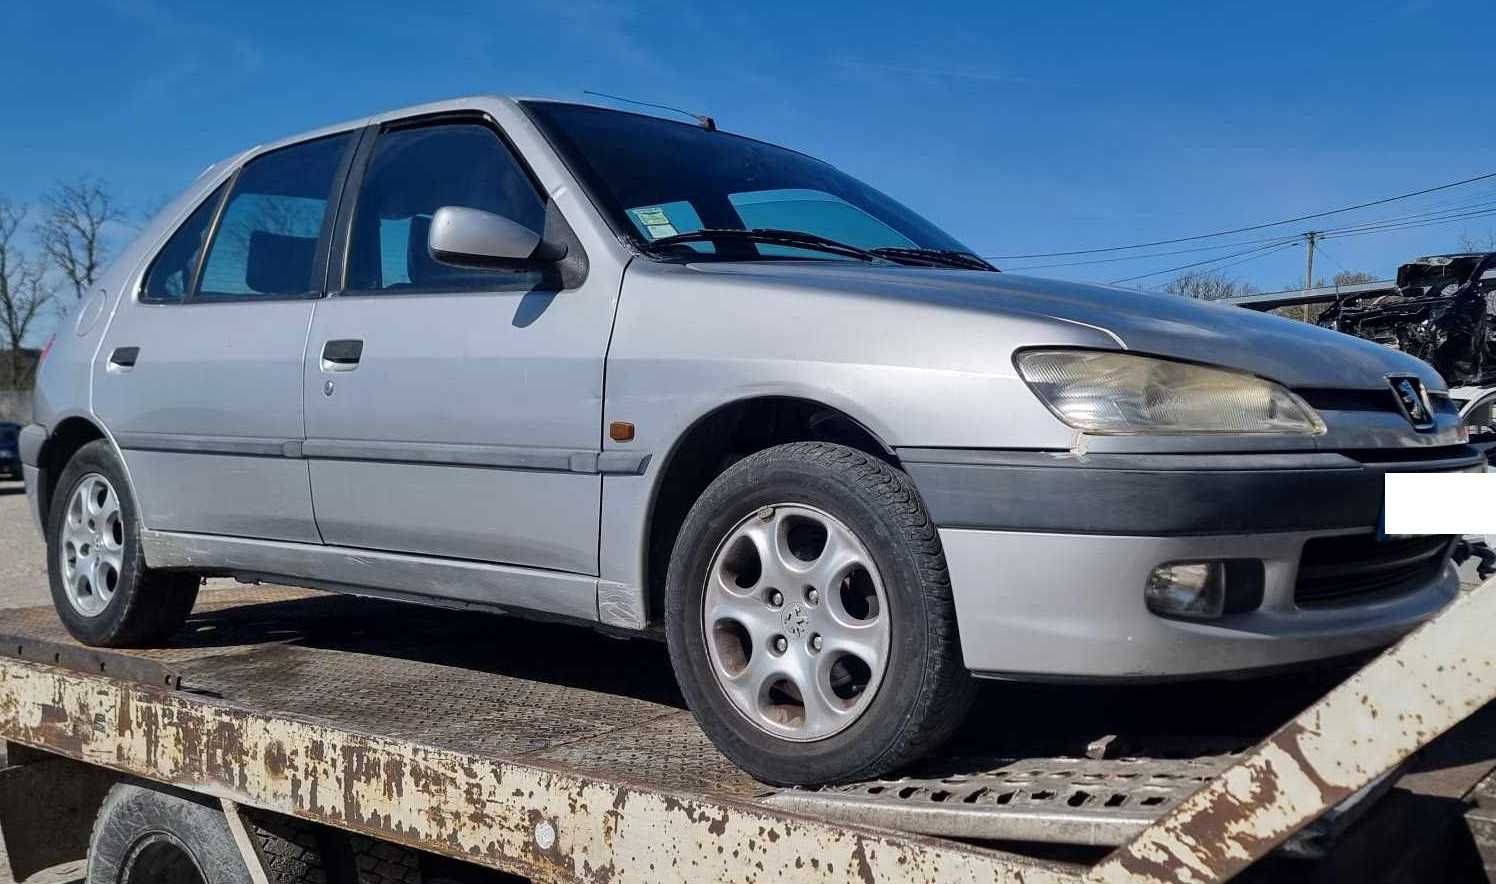 Para peças Peugeot 306 1.4 ano 1999